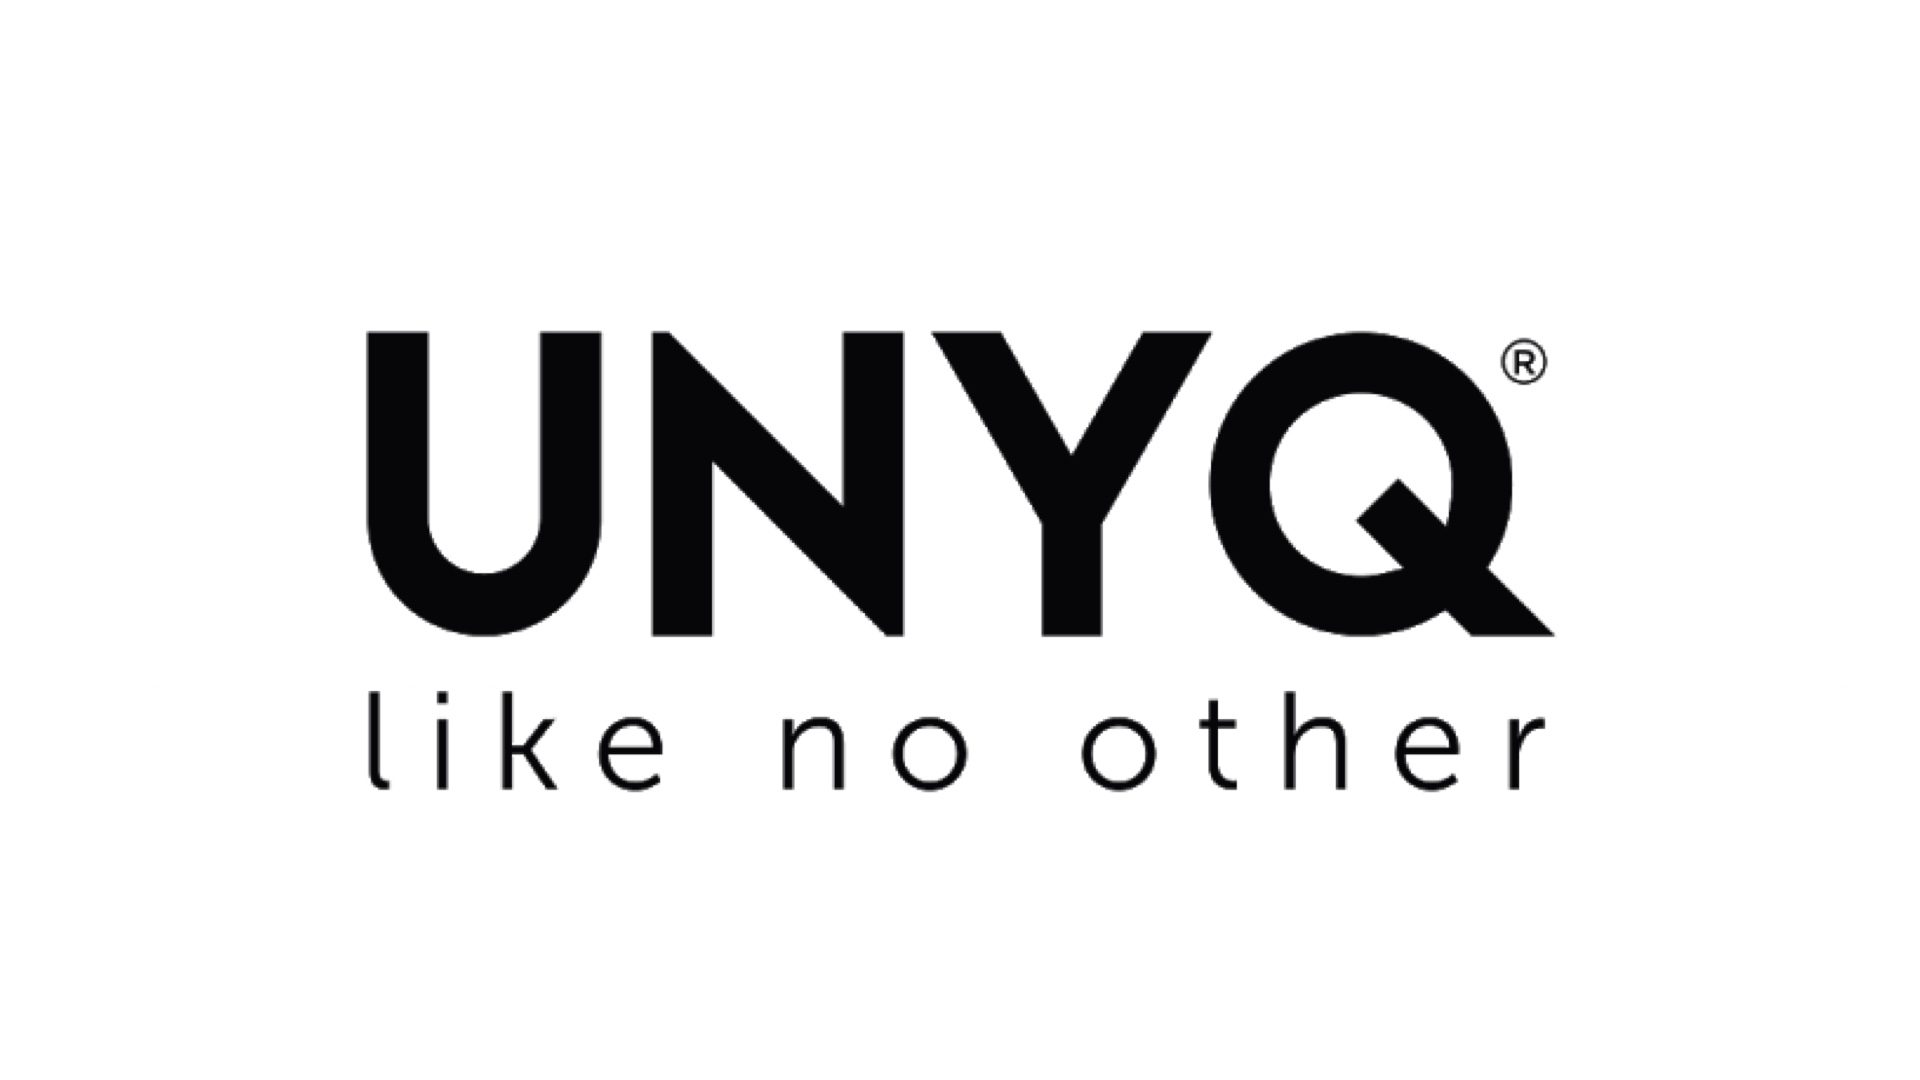 UNYQ logo